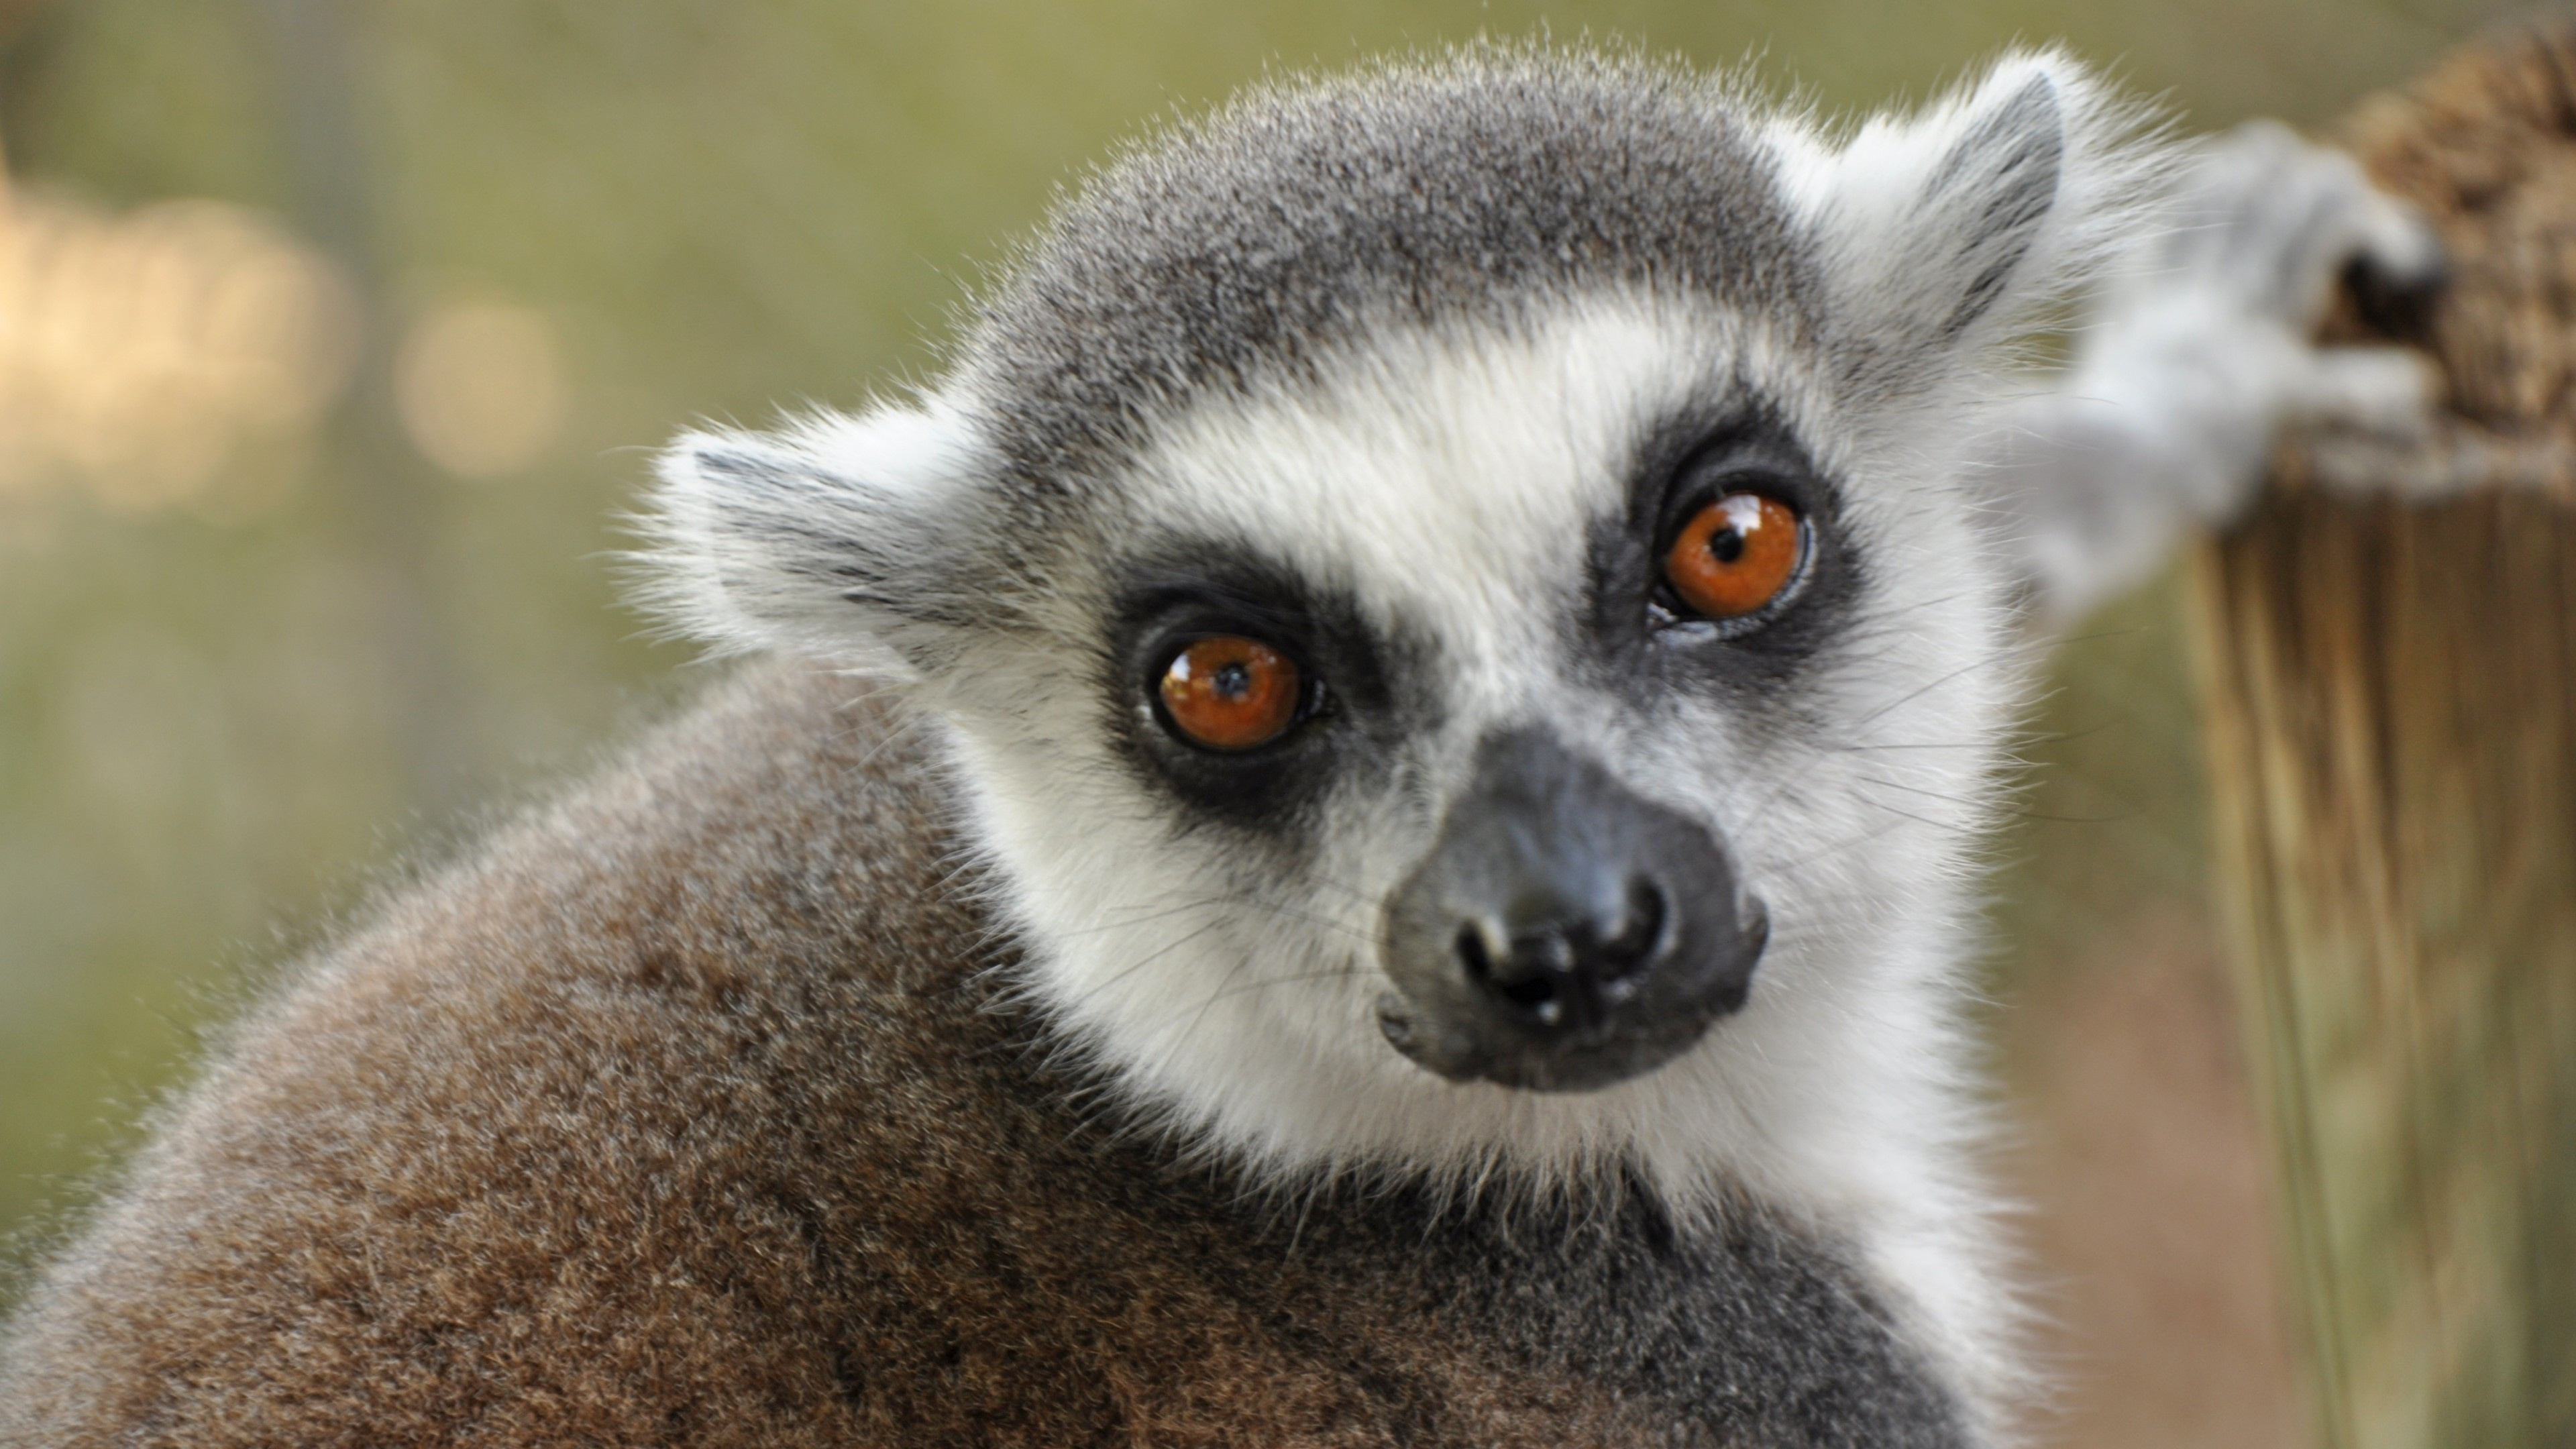 Lemur close-up, Intense gaze, Detailed features, Great for UHD TV, 3840x2160 4K Desktop